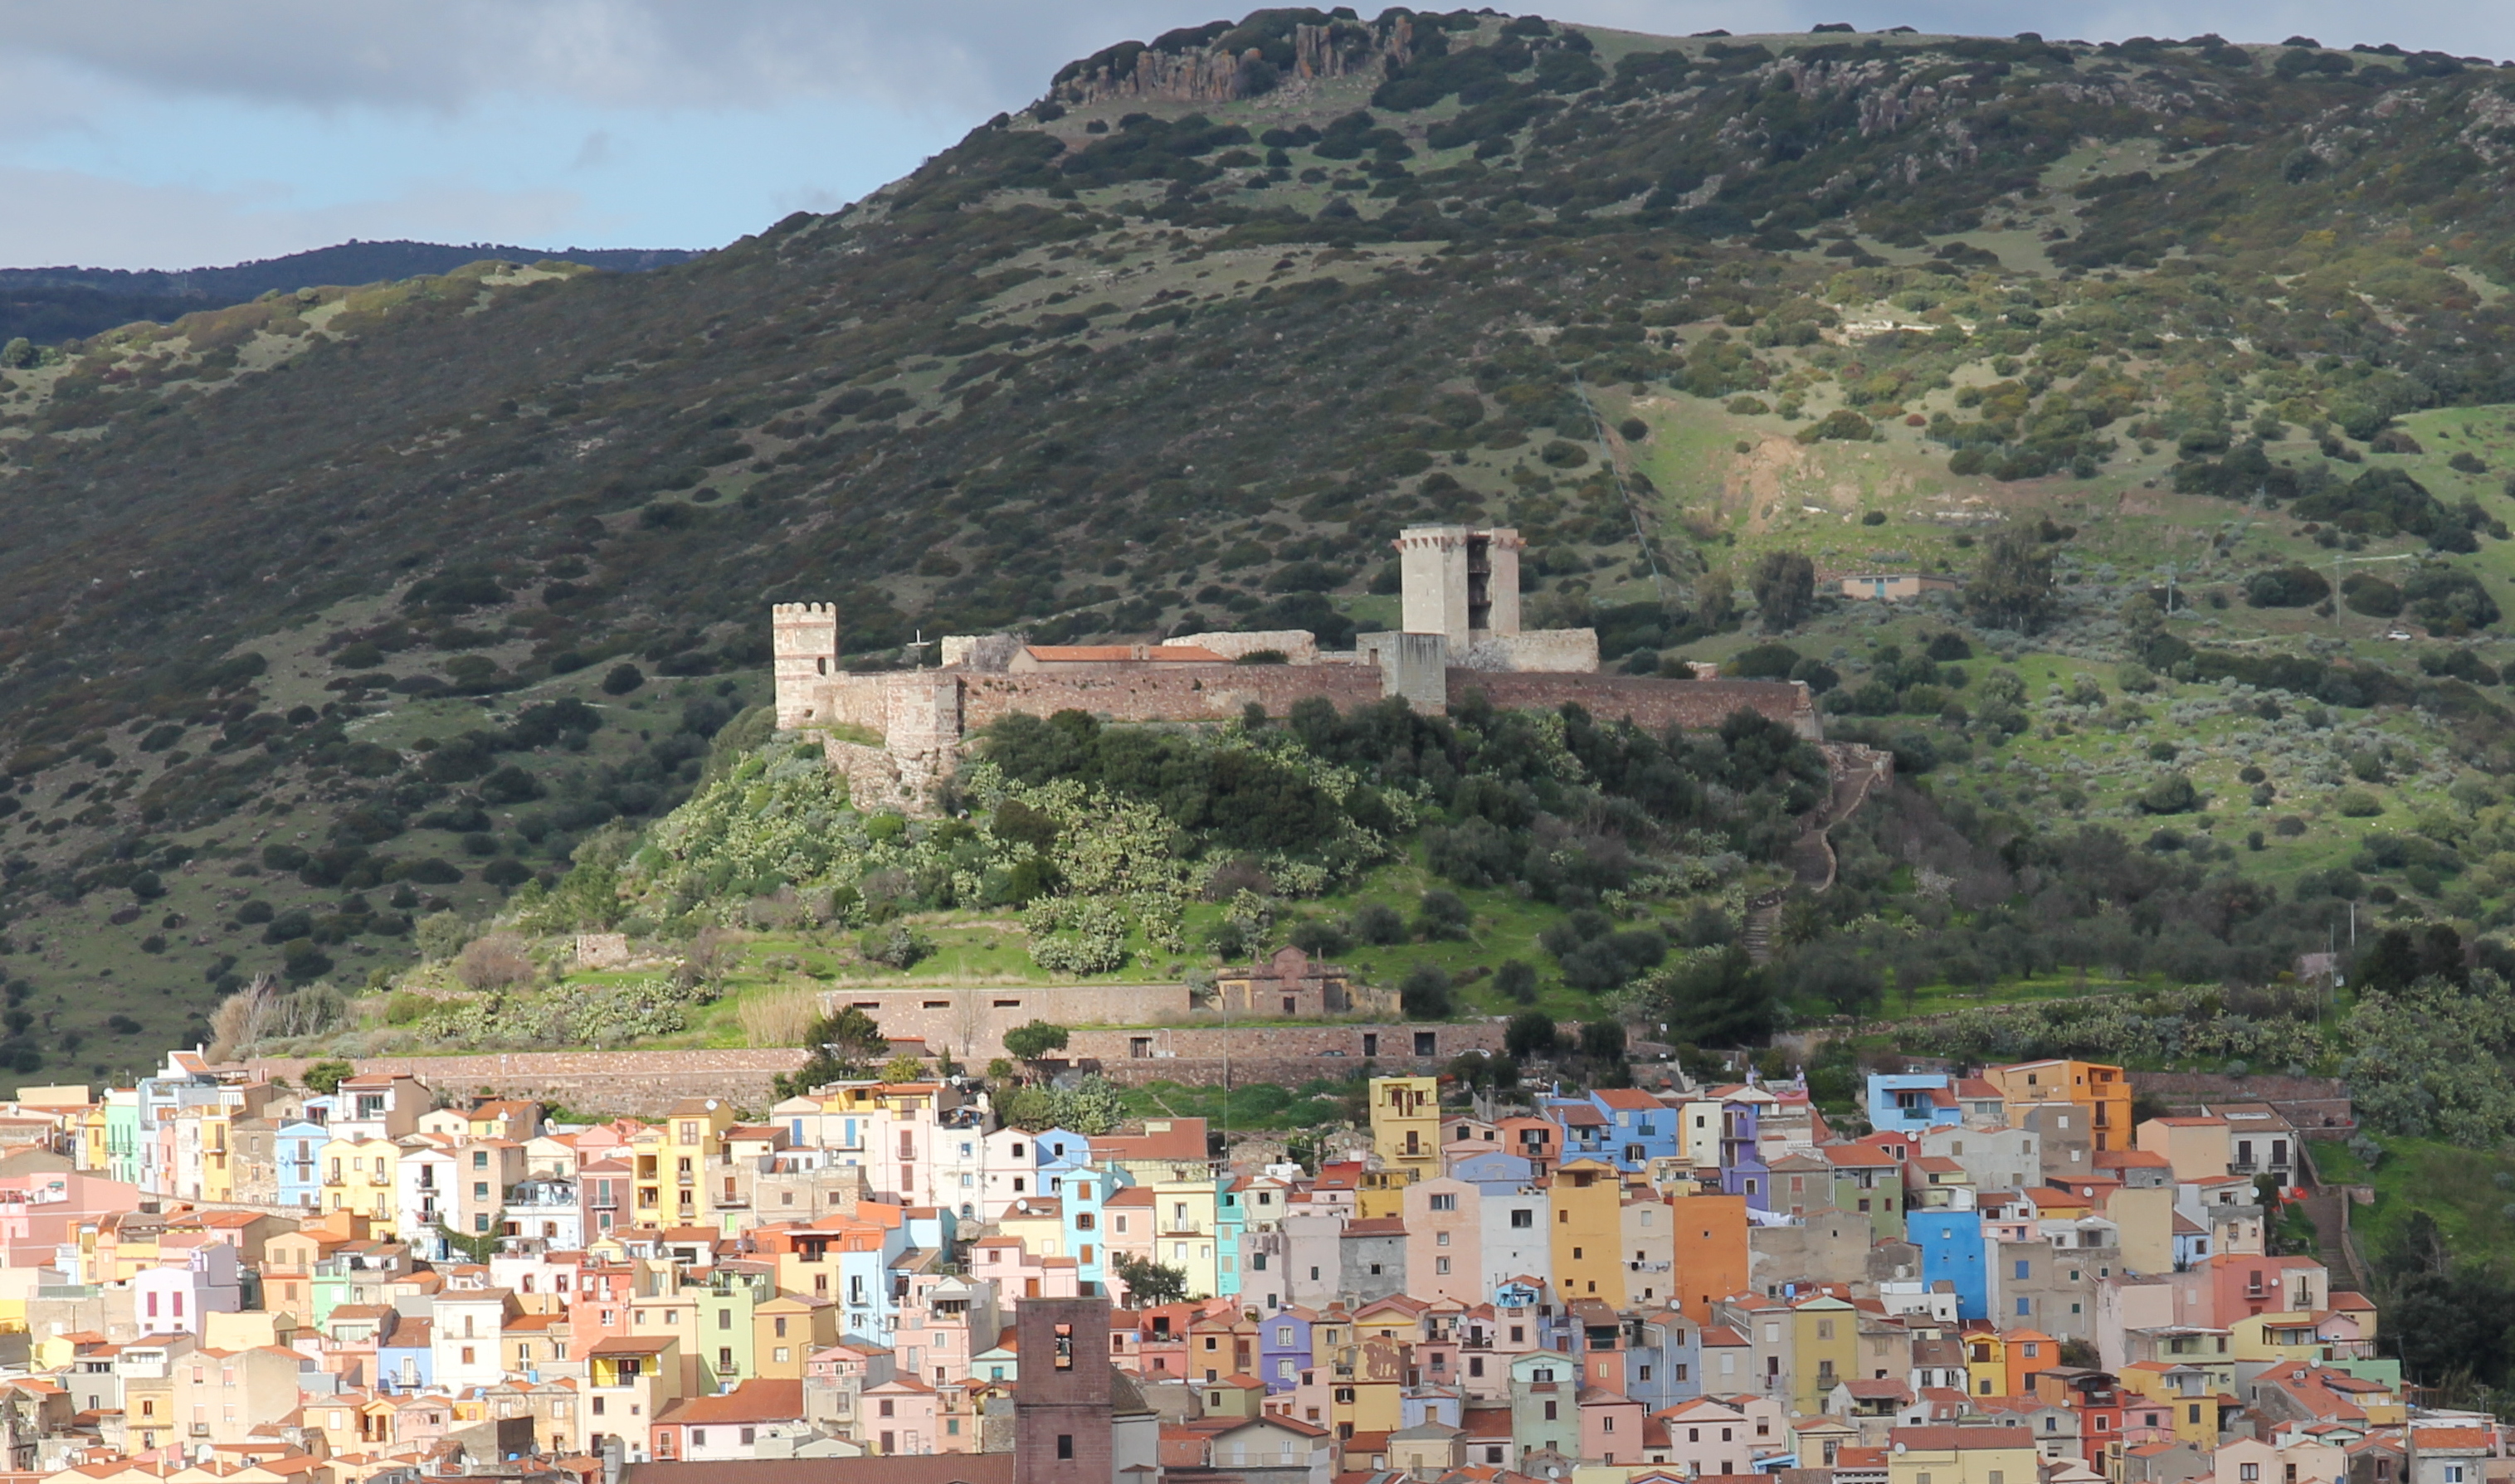 Bosa and the Serravalle Castle